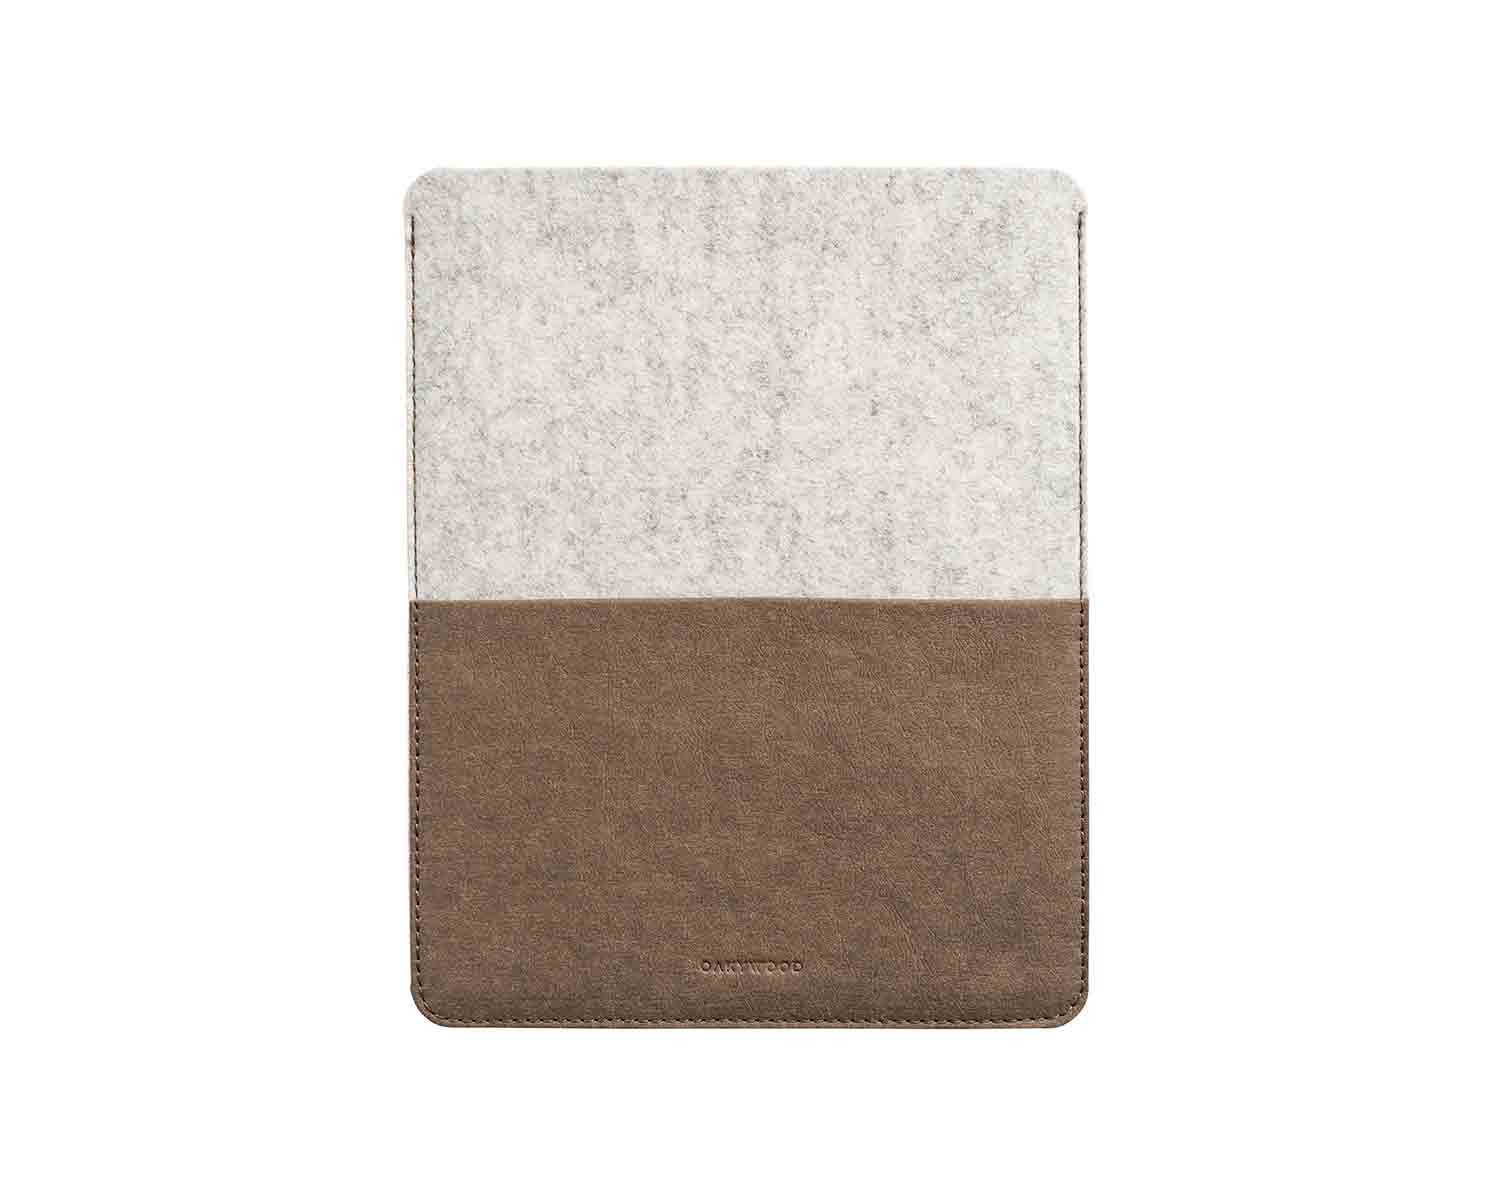 ipad macbook sleeves felt corkoak 456 12.9 inch white front